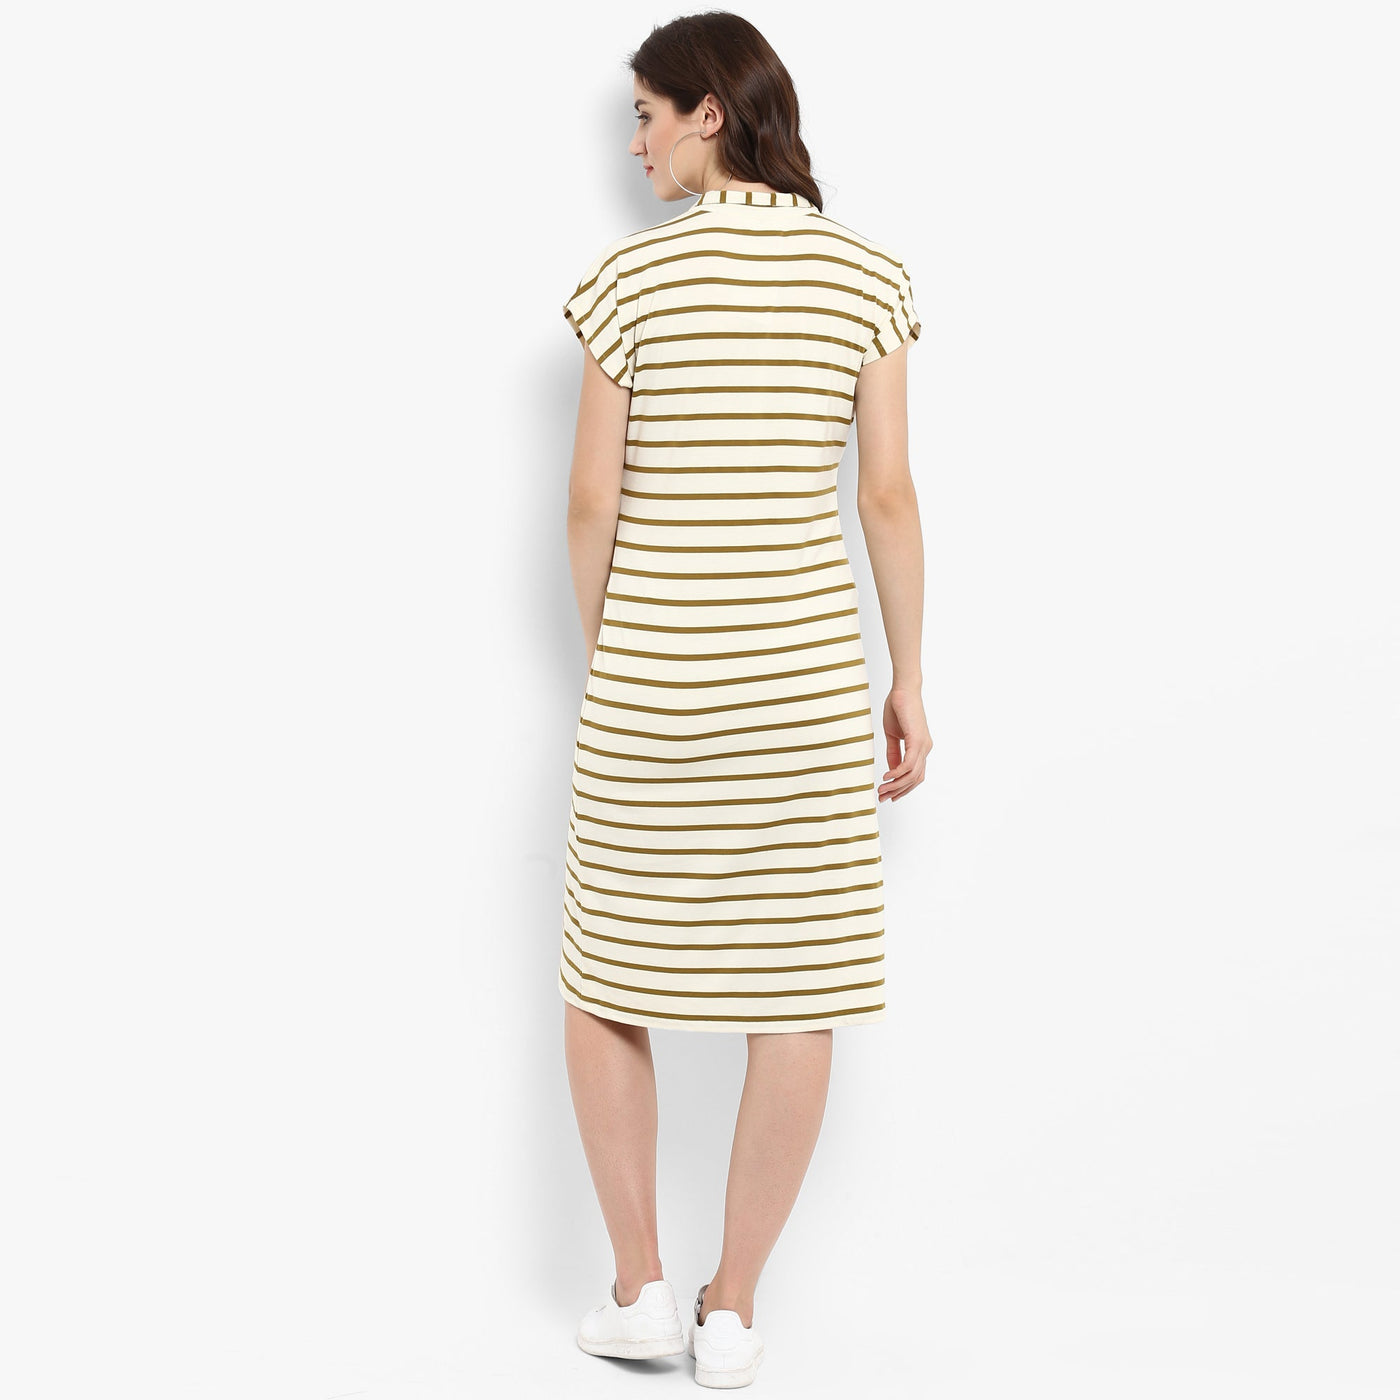 Knitted Stripe Dress